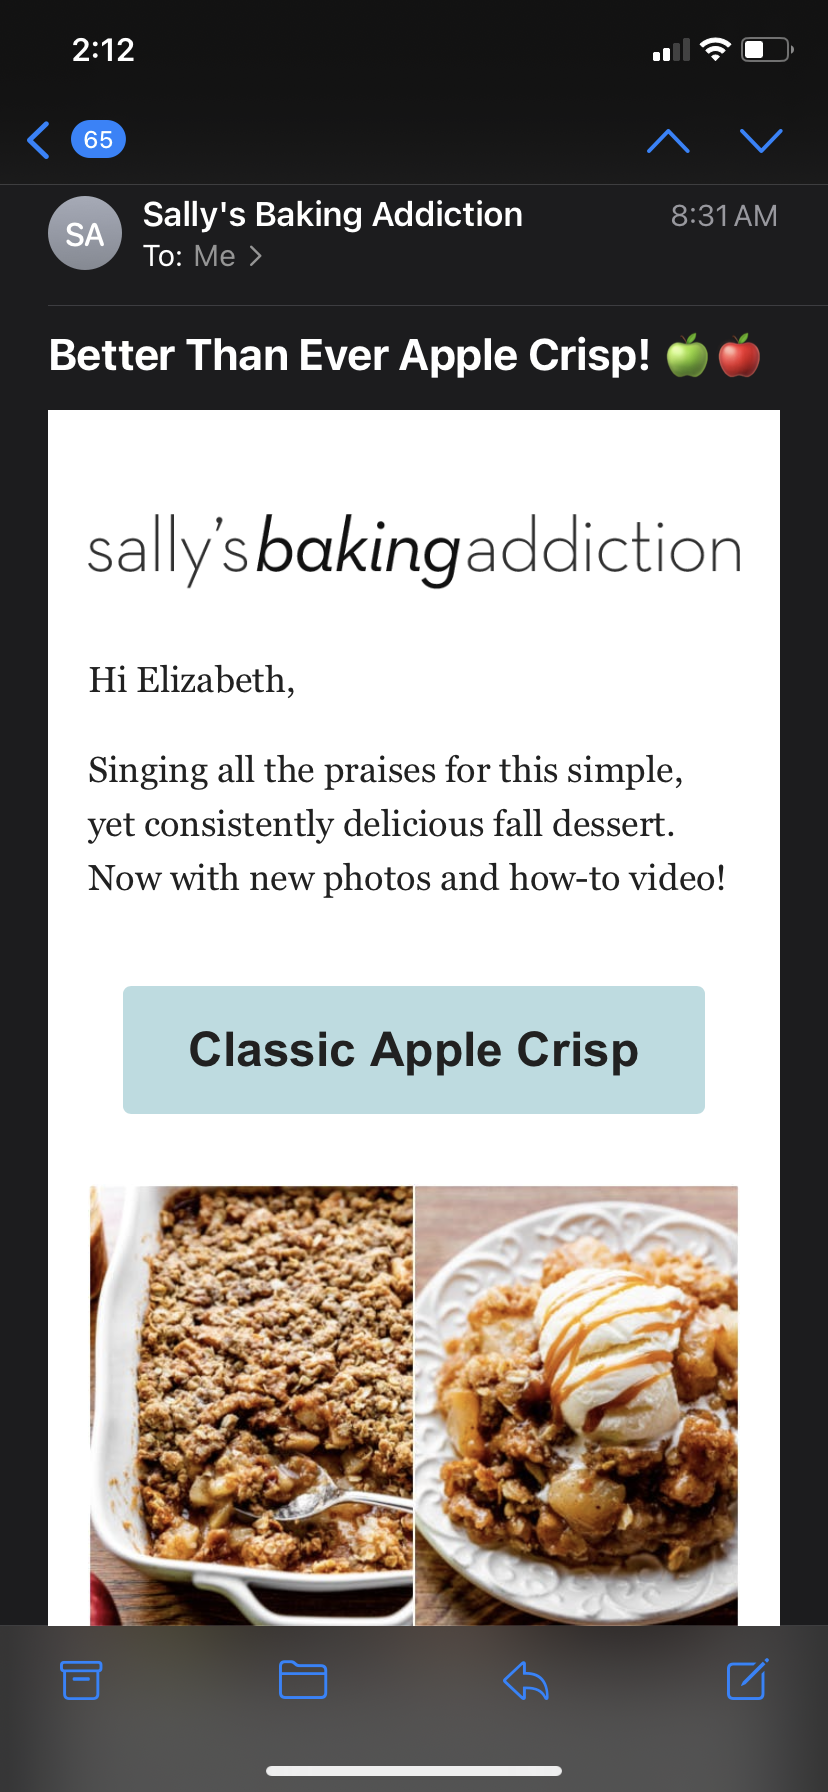 Classic Apple Crisp Recipe (Video) - Sally's Baking Addiction